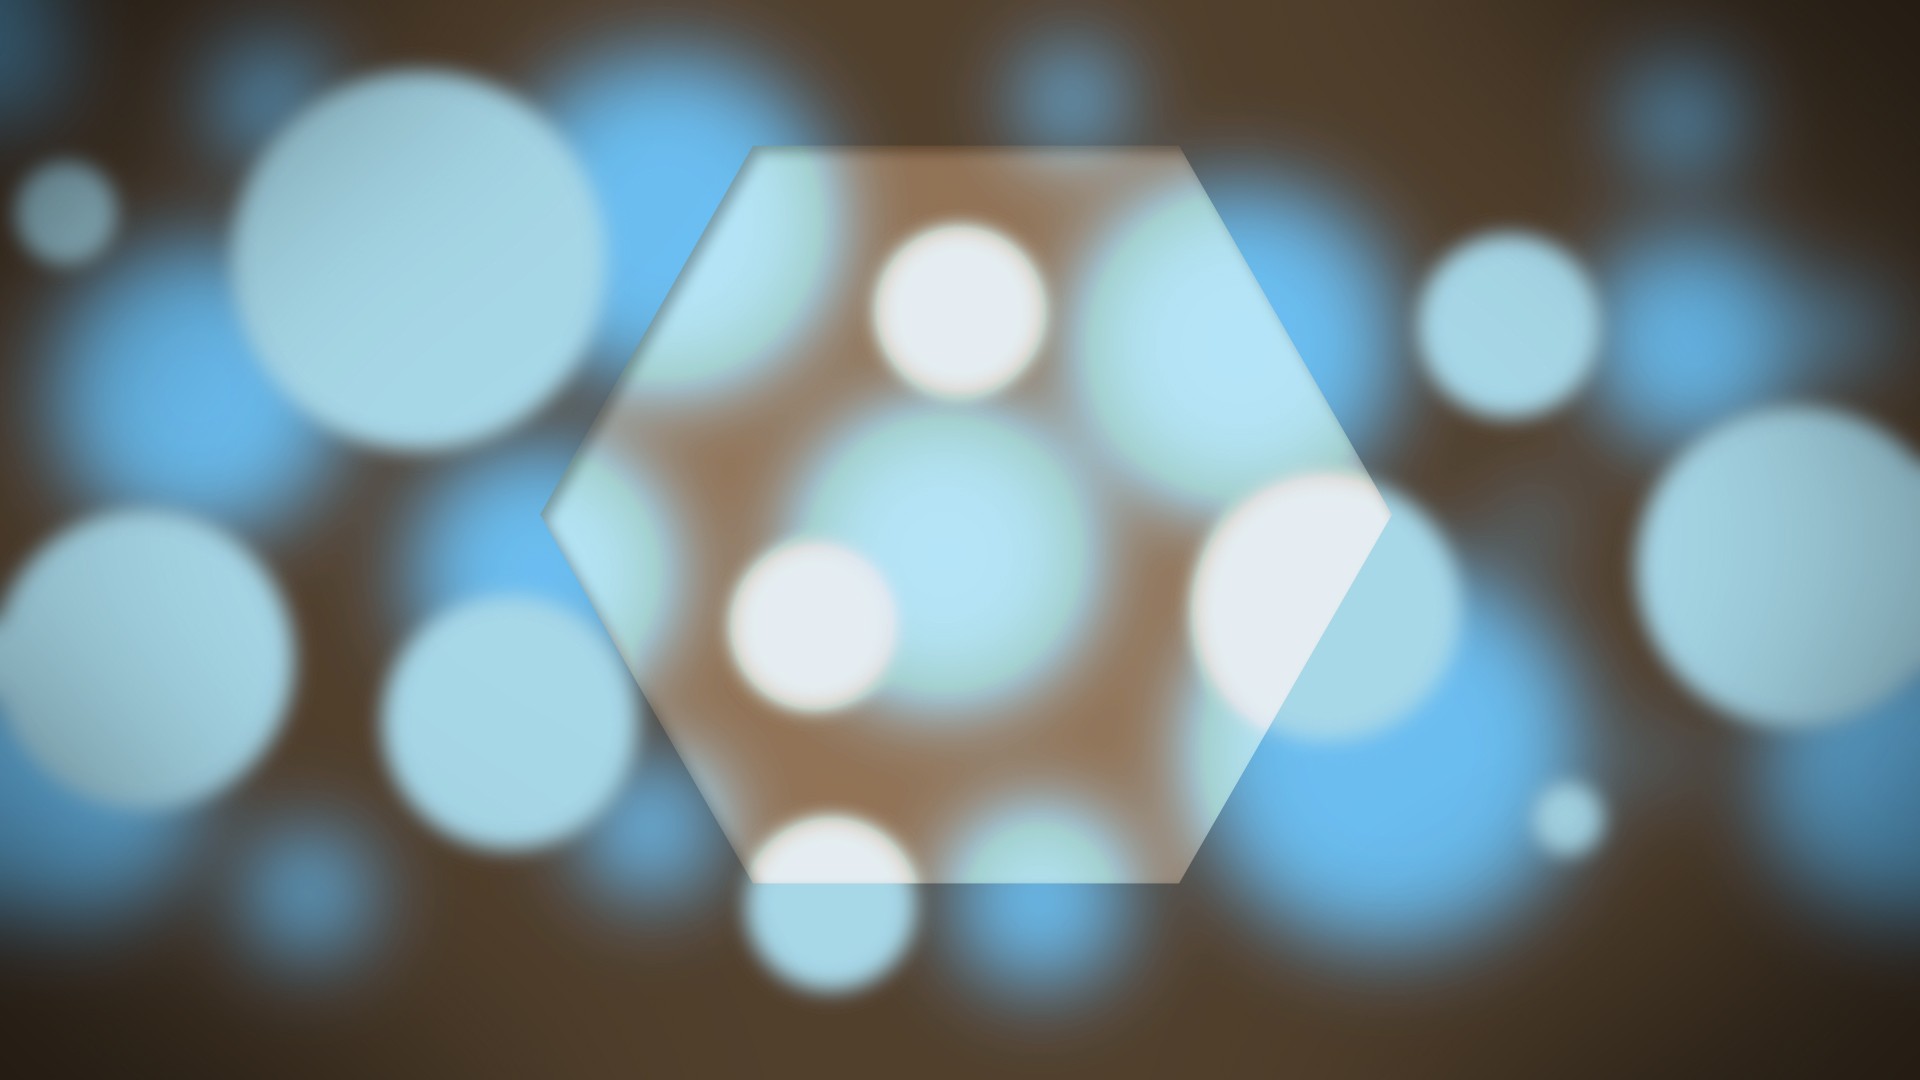 General 1920x1080 minimalism bokeh hexagon geometric figures digital art blue